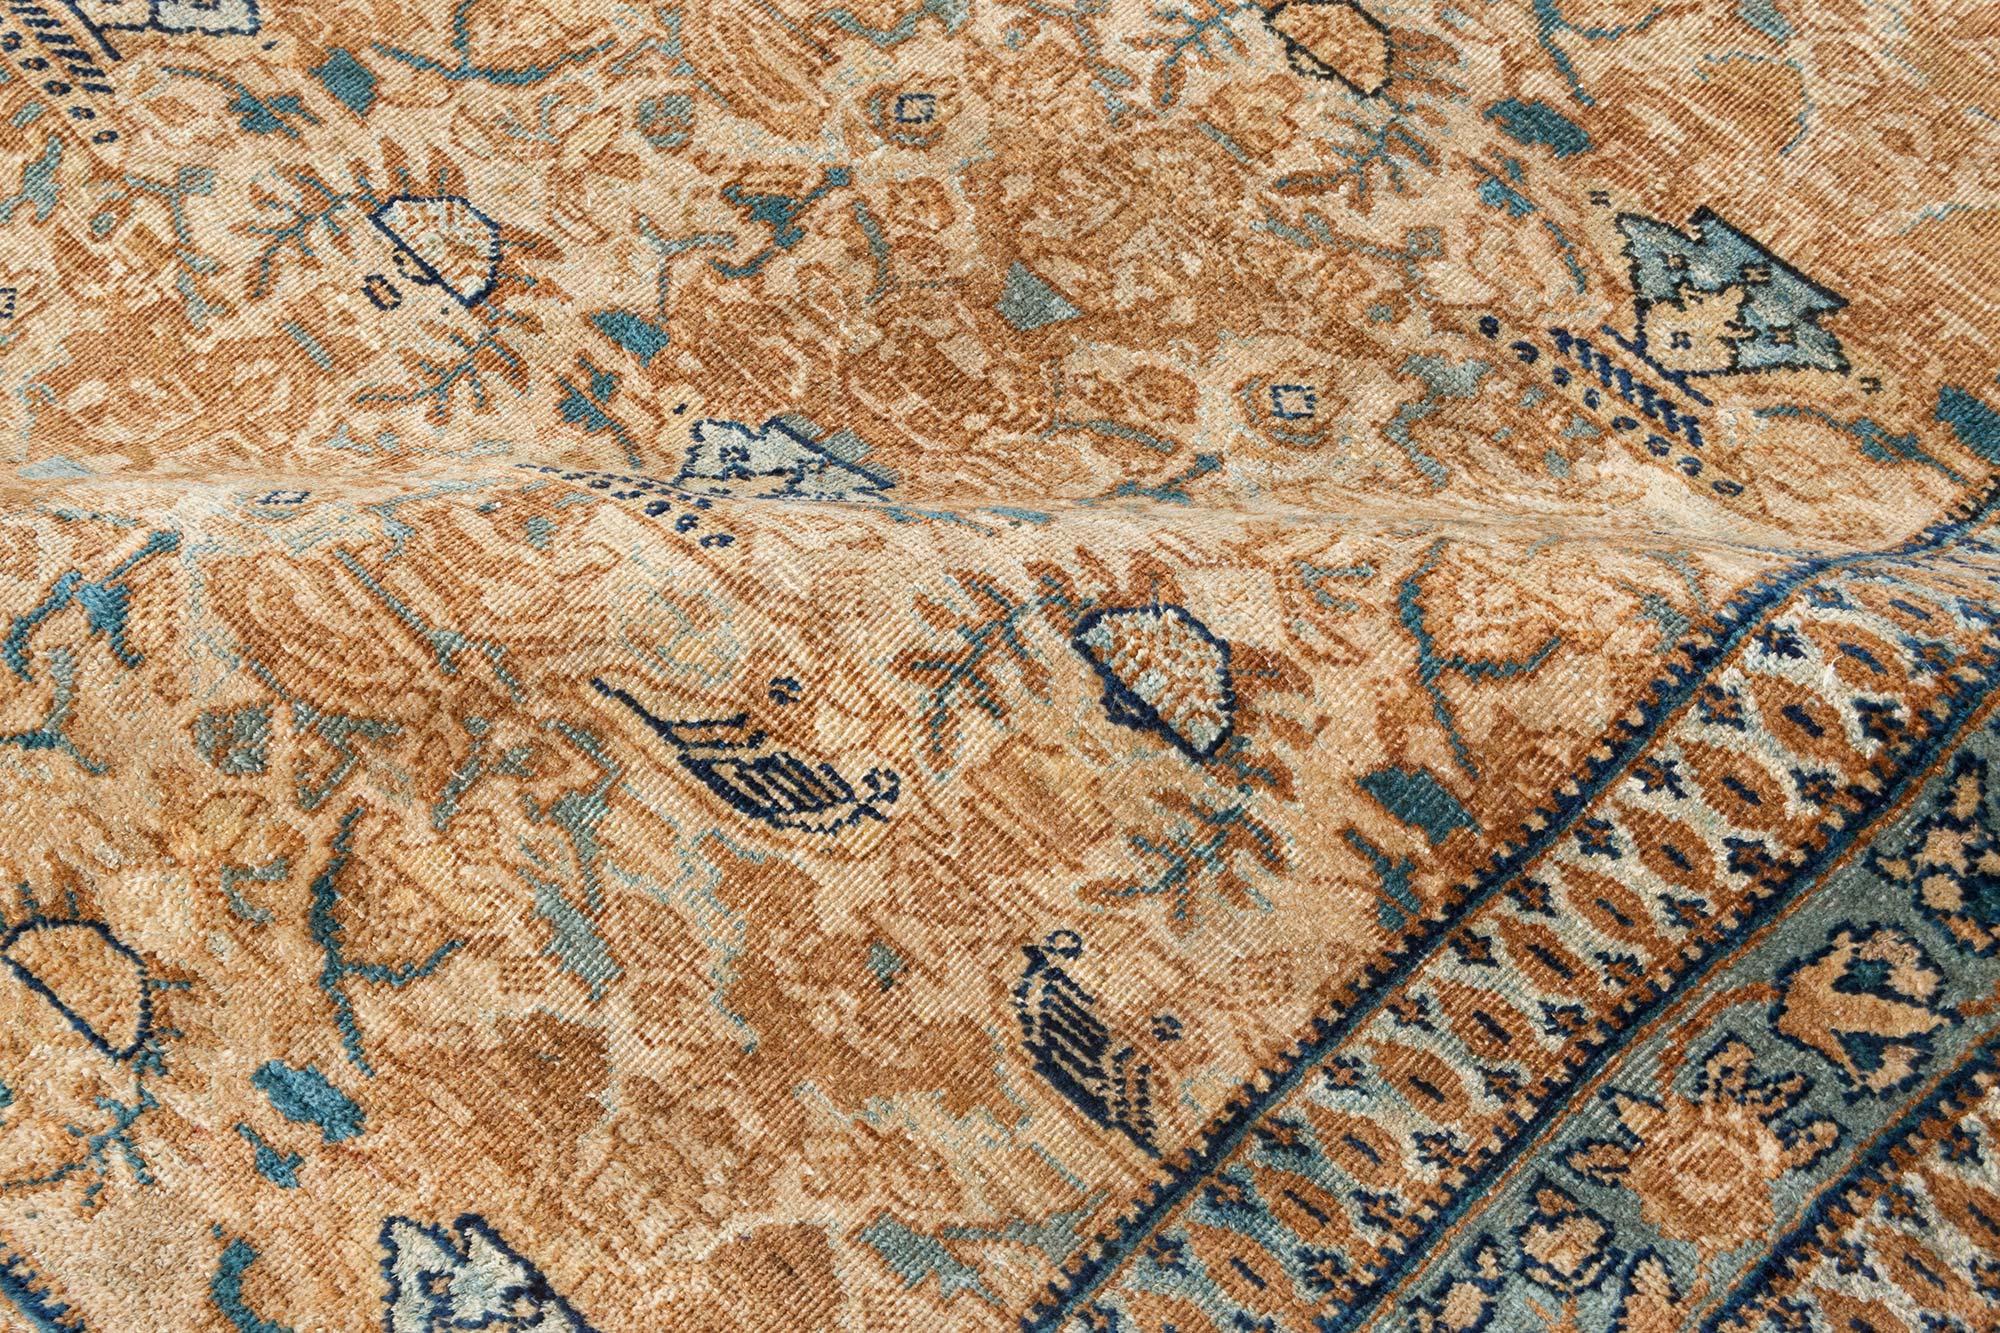 Authentic 1900s Persian Kirman handmade wool carpet
Size: 10'1